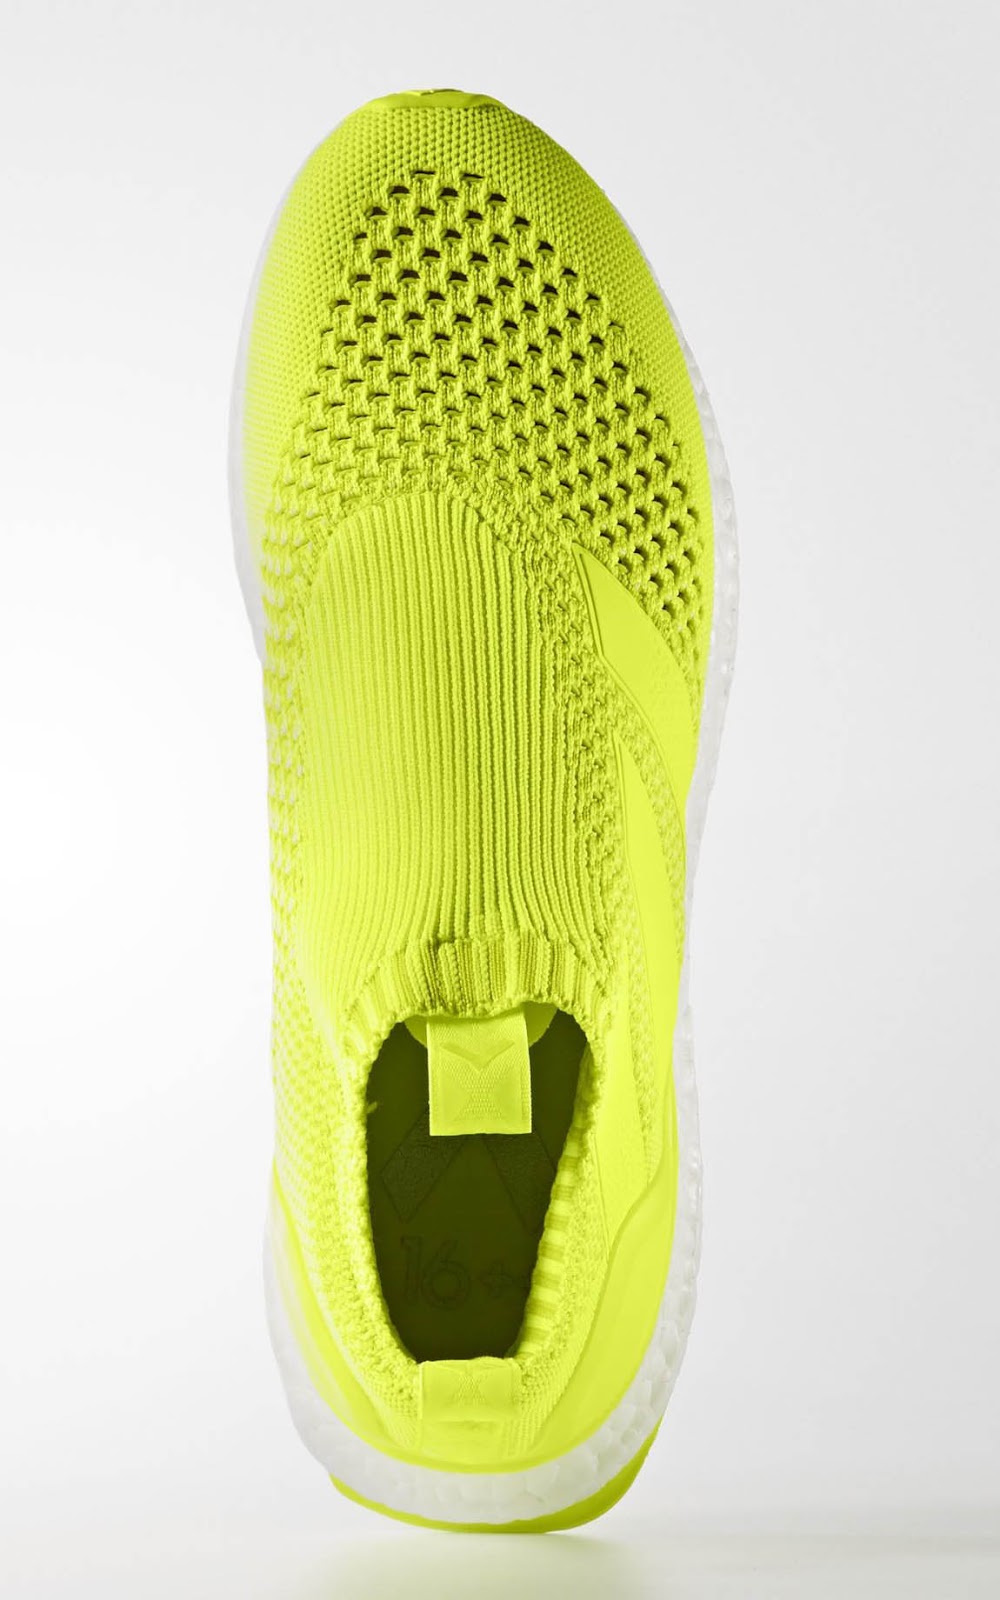 Yellow Adidas Ace 16+ PureControl UltraBoost Released - Footy Headlines